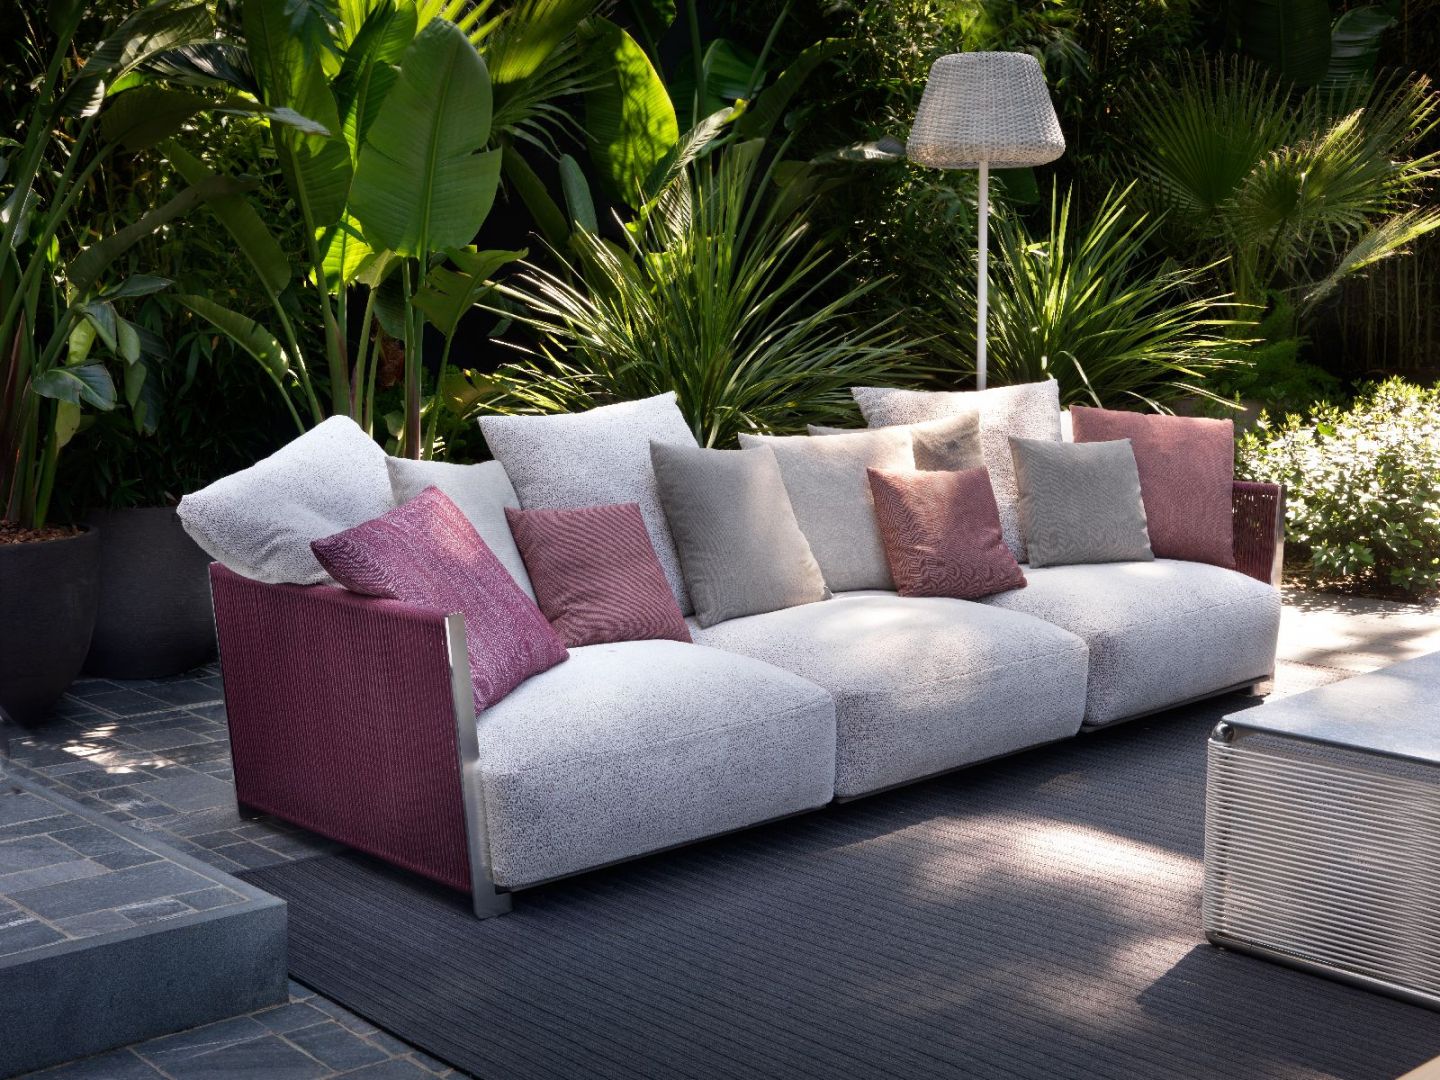 Sofa ogrodowa marki Flexform. Fot. Studio Forma 96